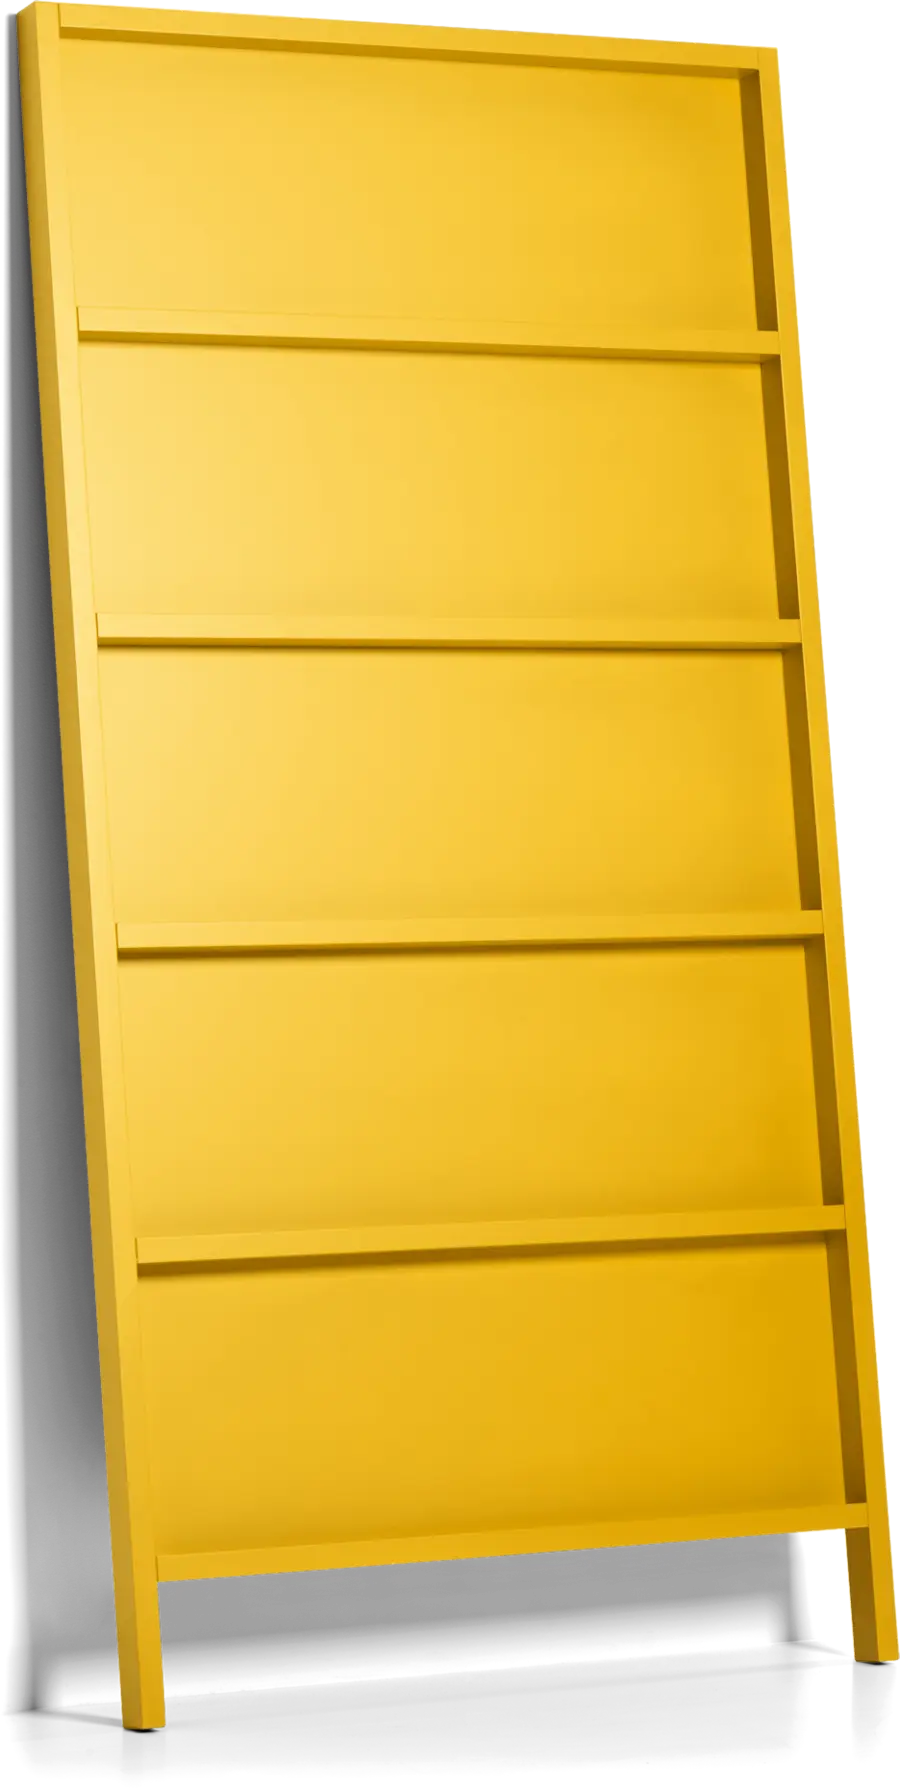 Oblique Small bookshelf golden yellow